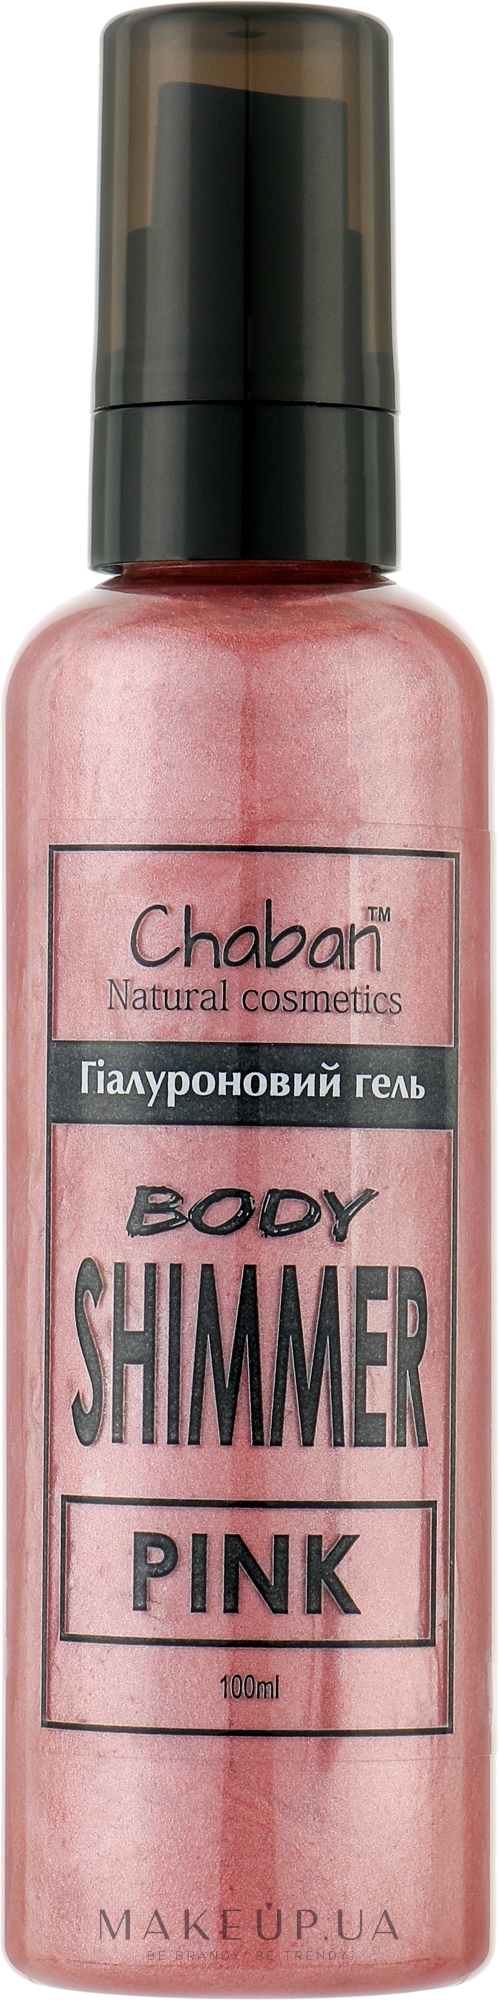 Гиалуроновый гель-шимер для тела - Chaban Pink Body Shimmer — фото 100ml